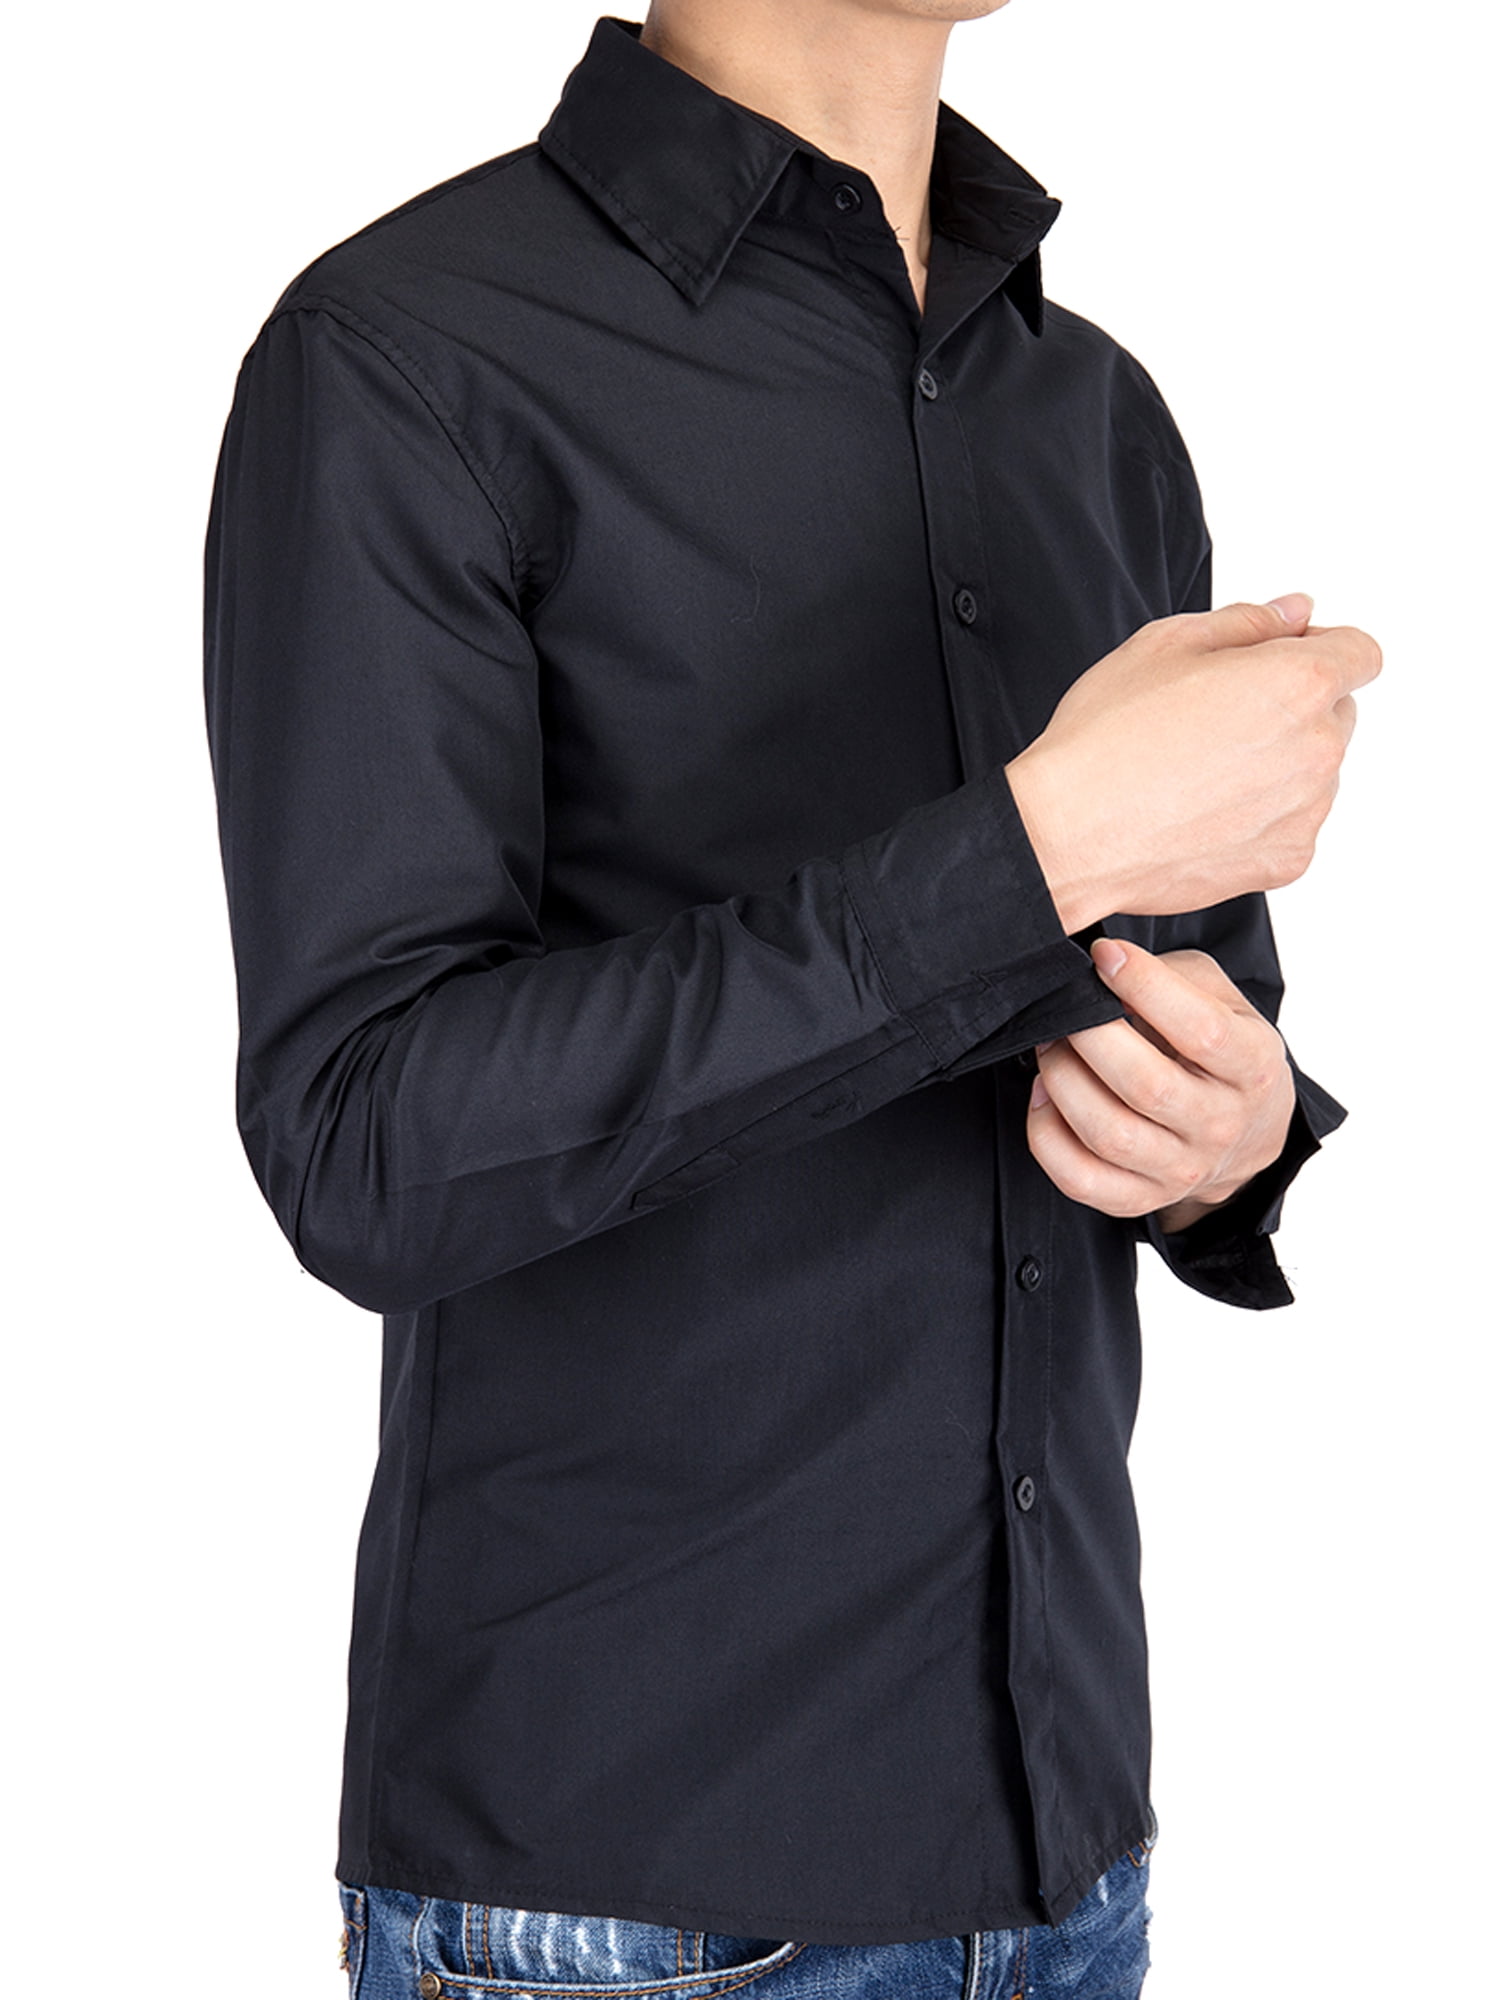 mens dress shirt with black buttons